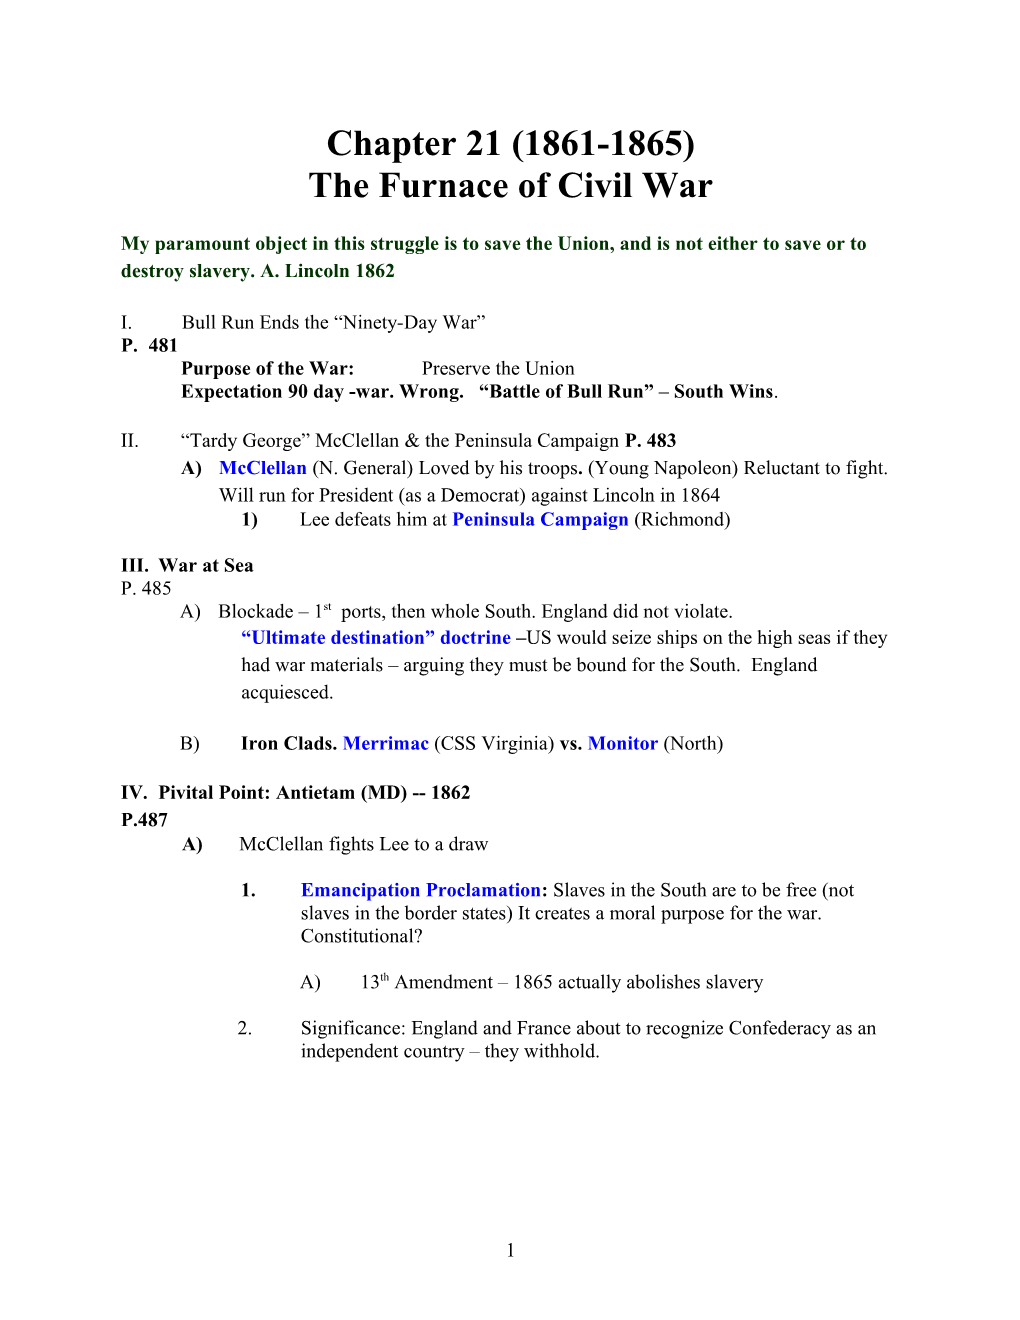 The Furnace of Civil War